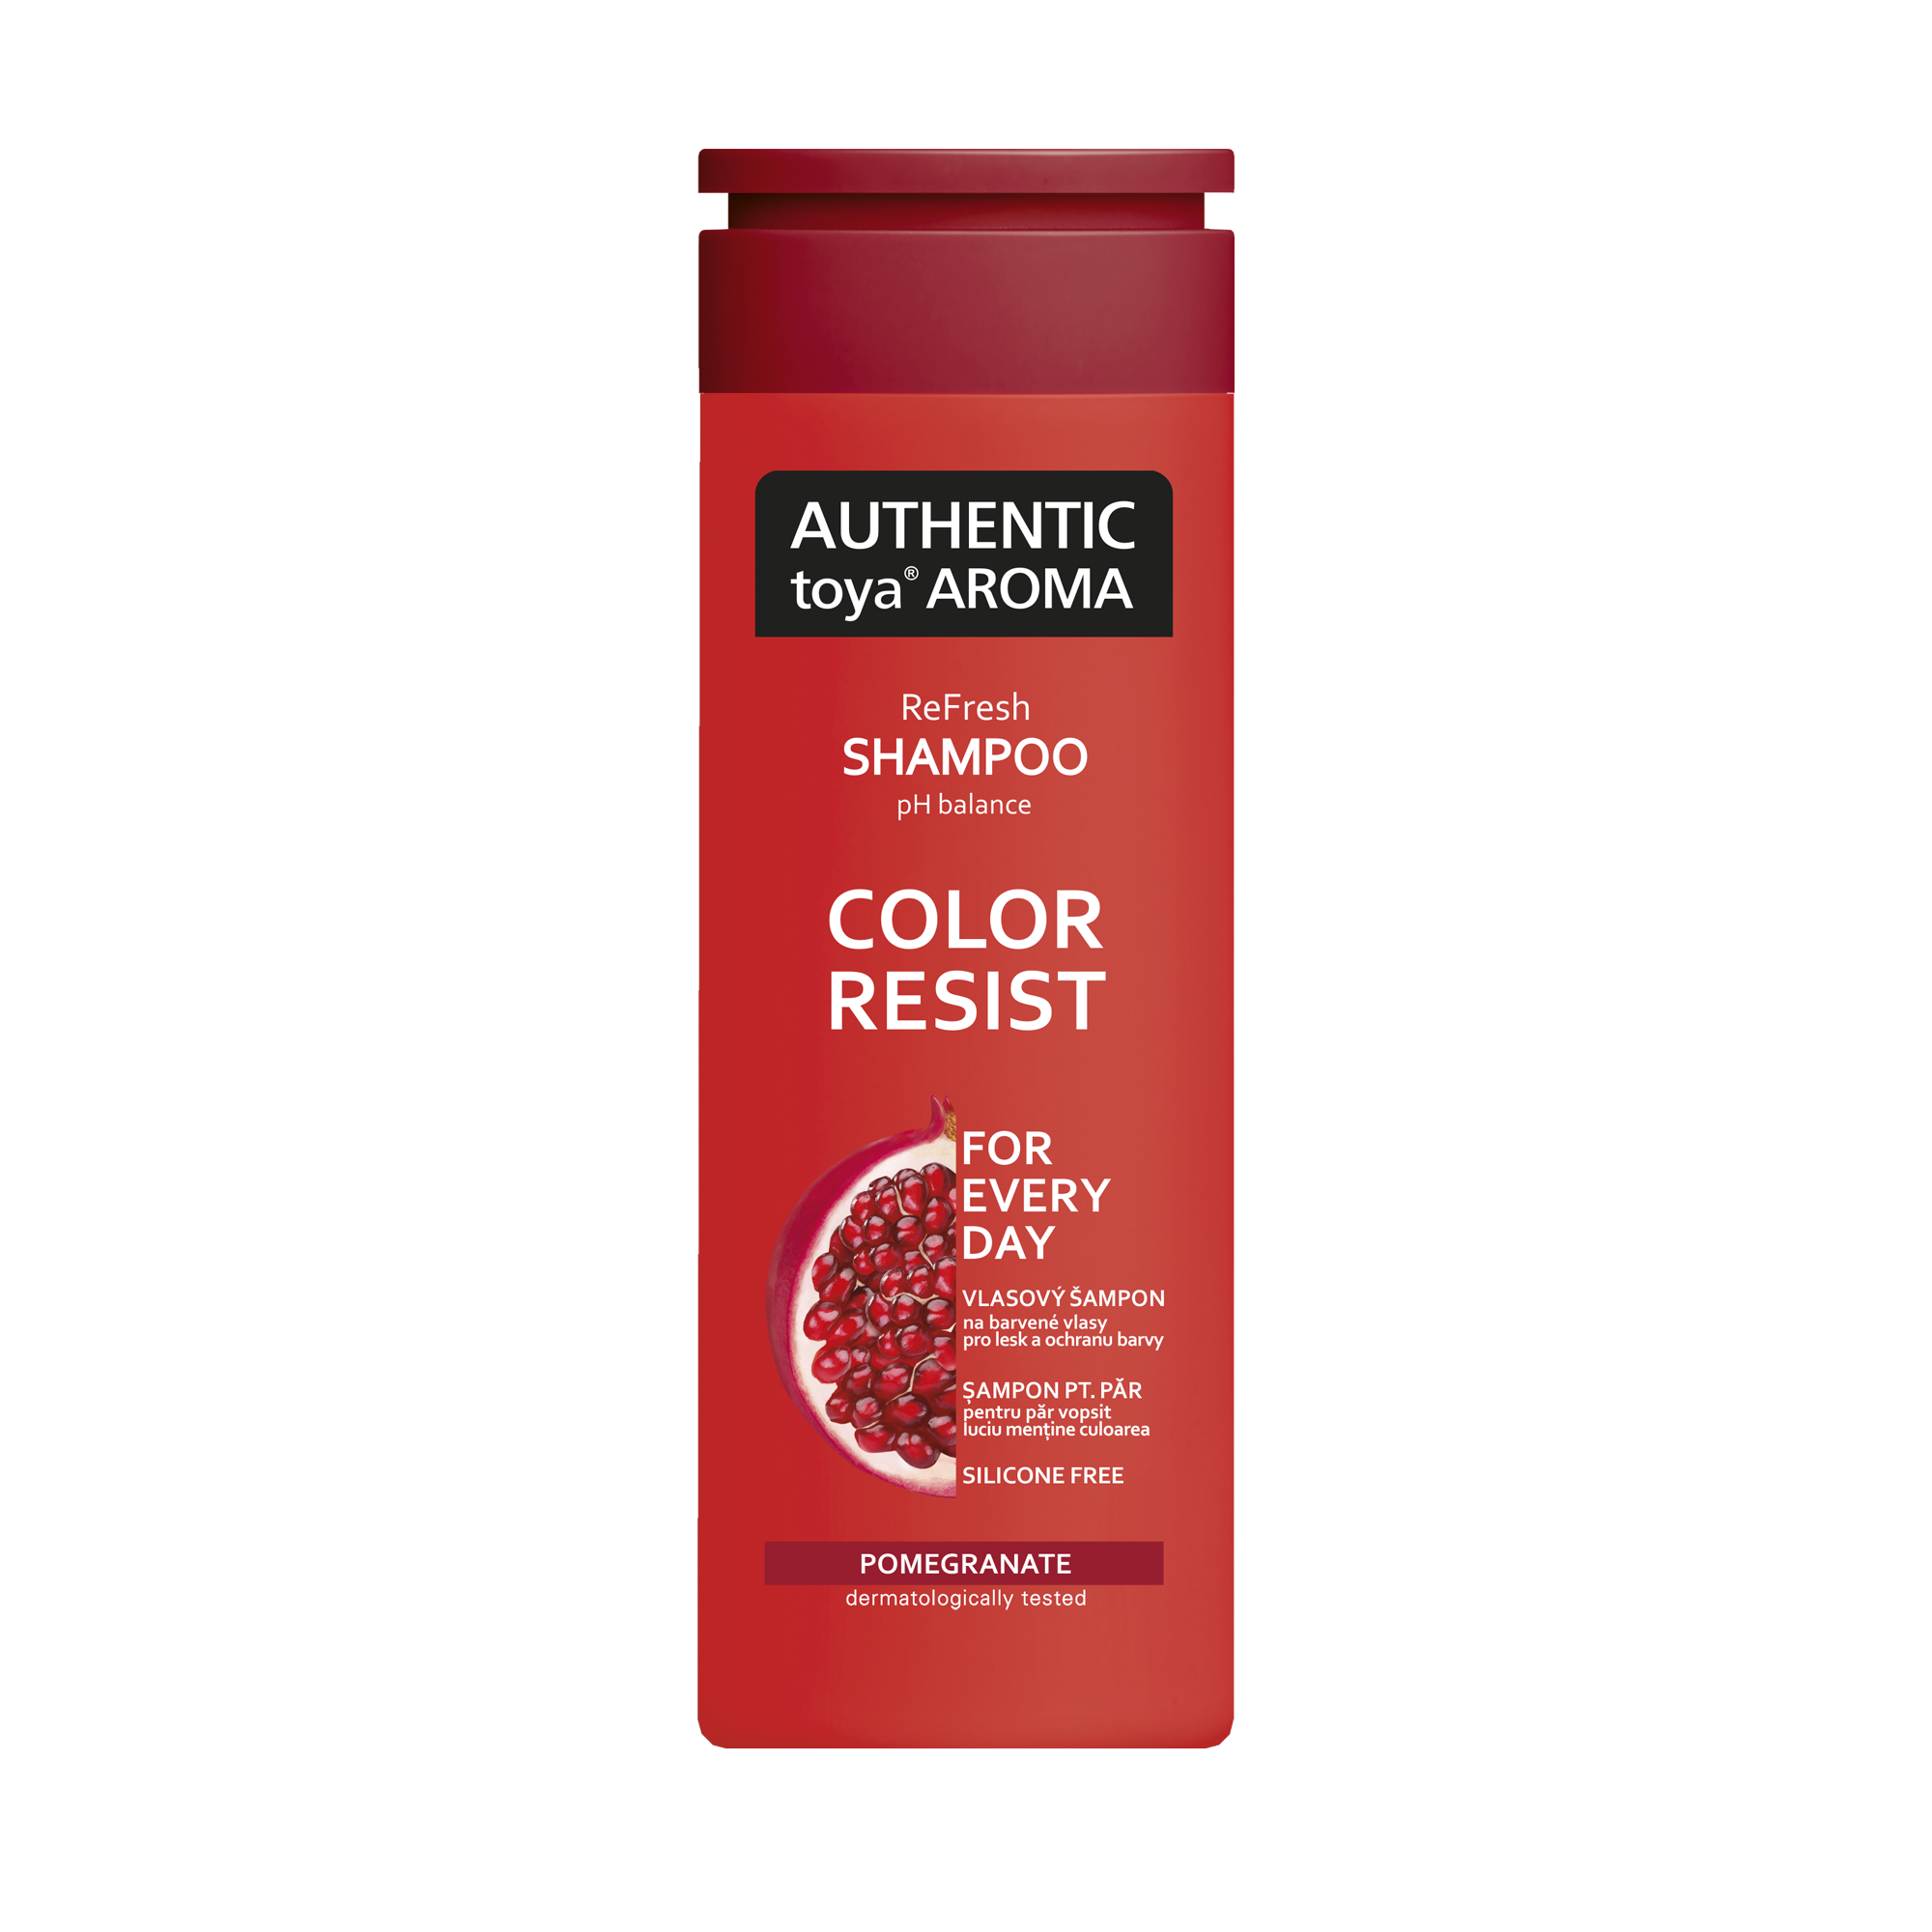 AUTHENTIC toya AROMA vlasový šampon Color Resist